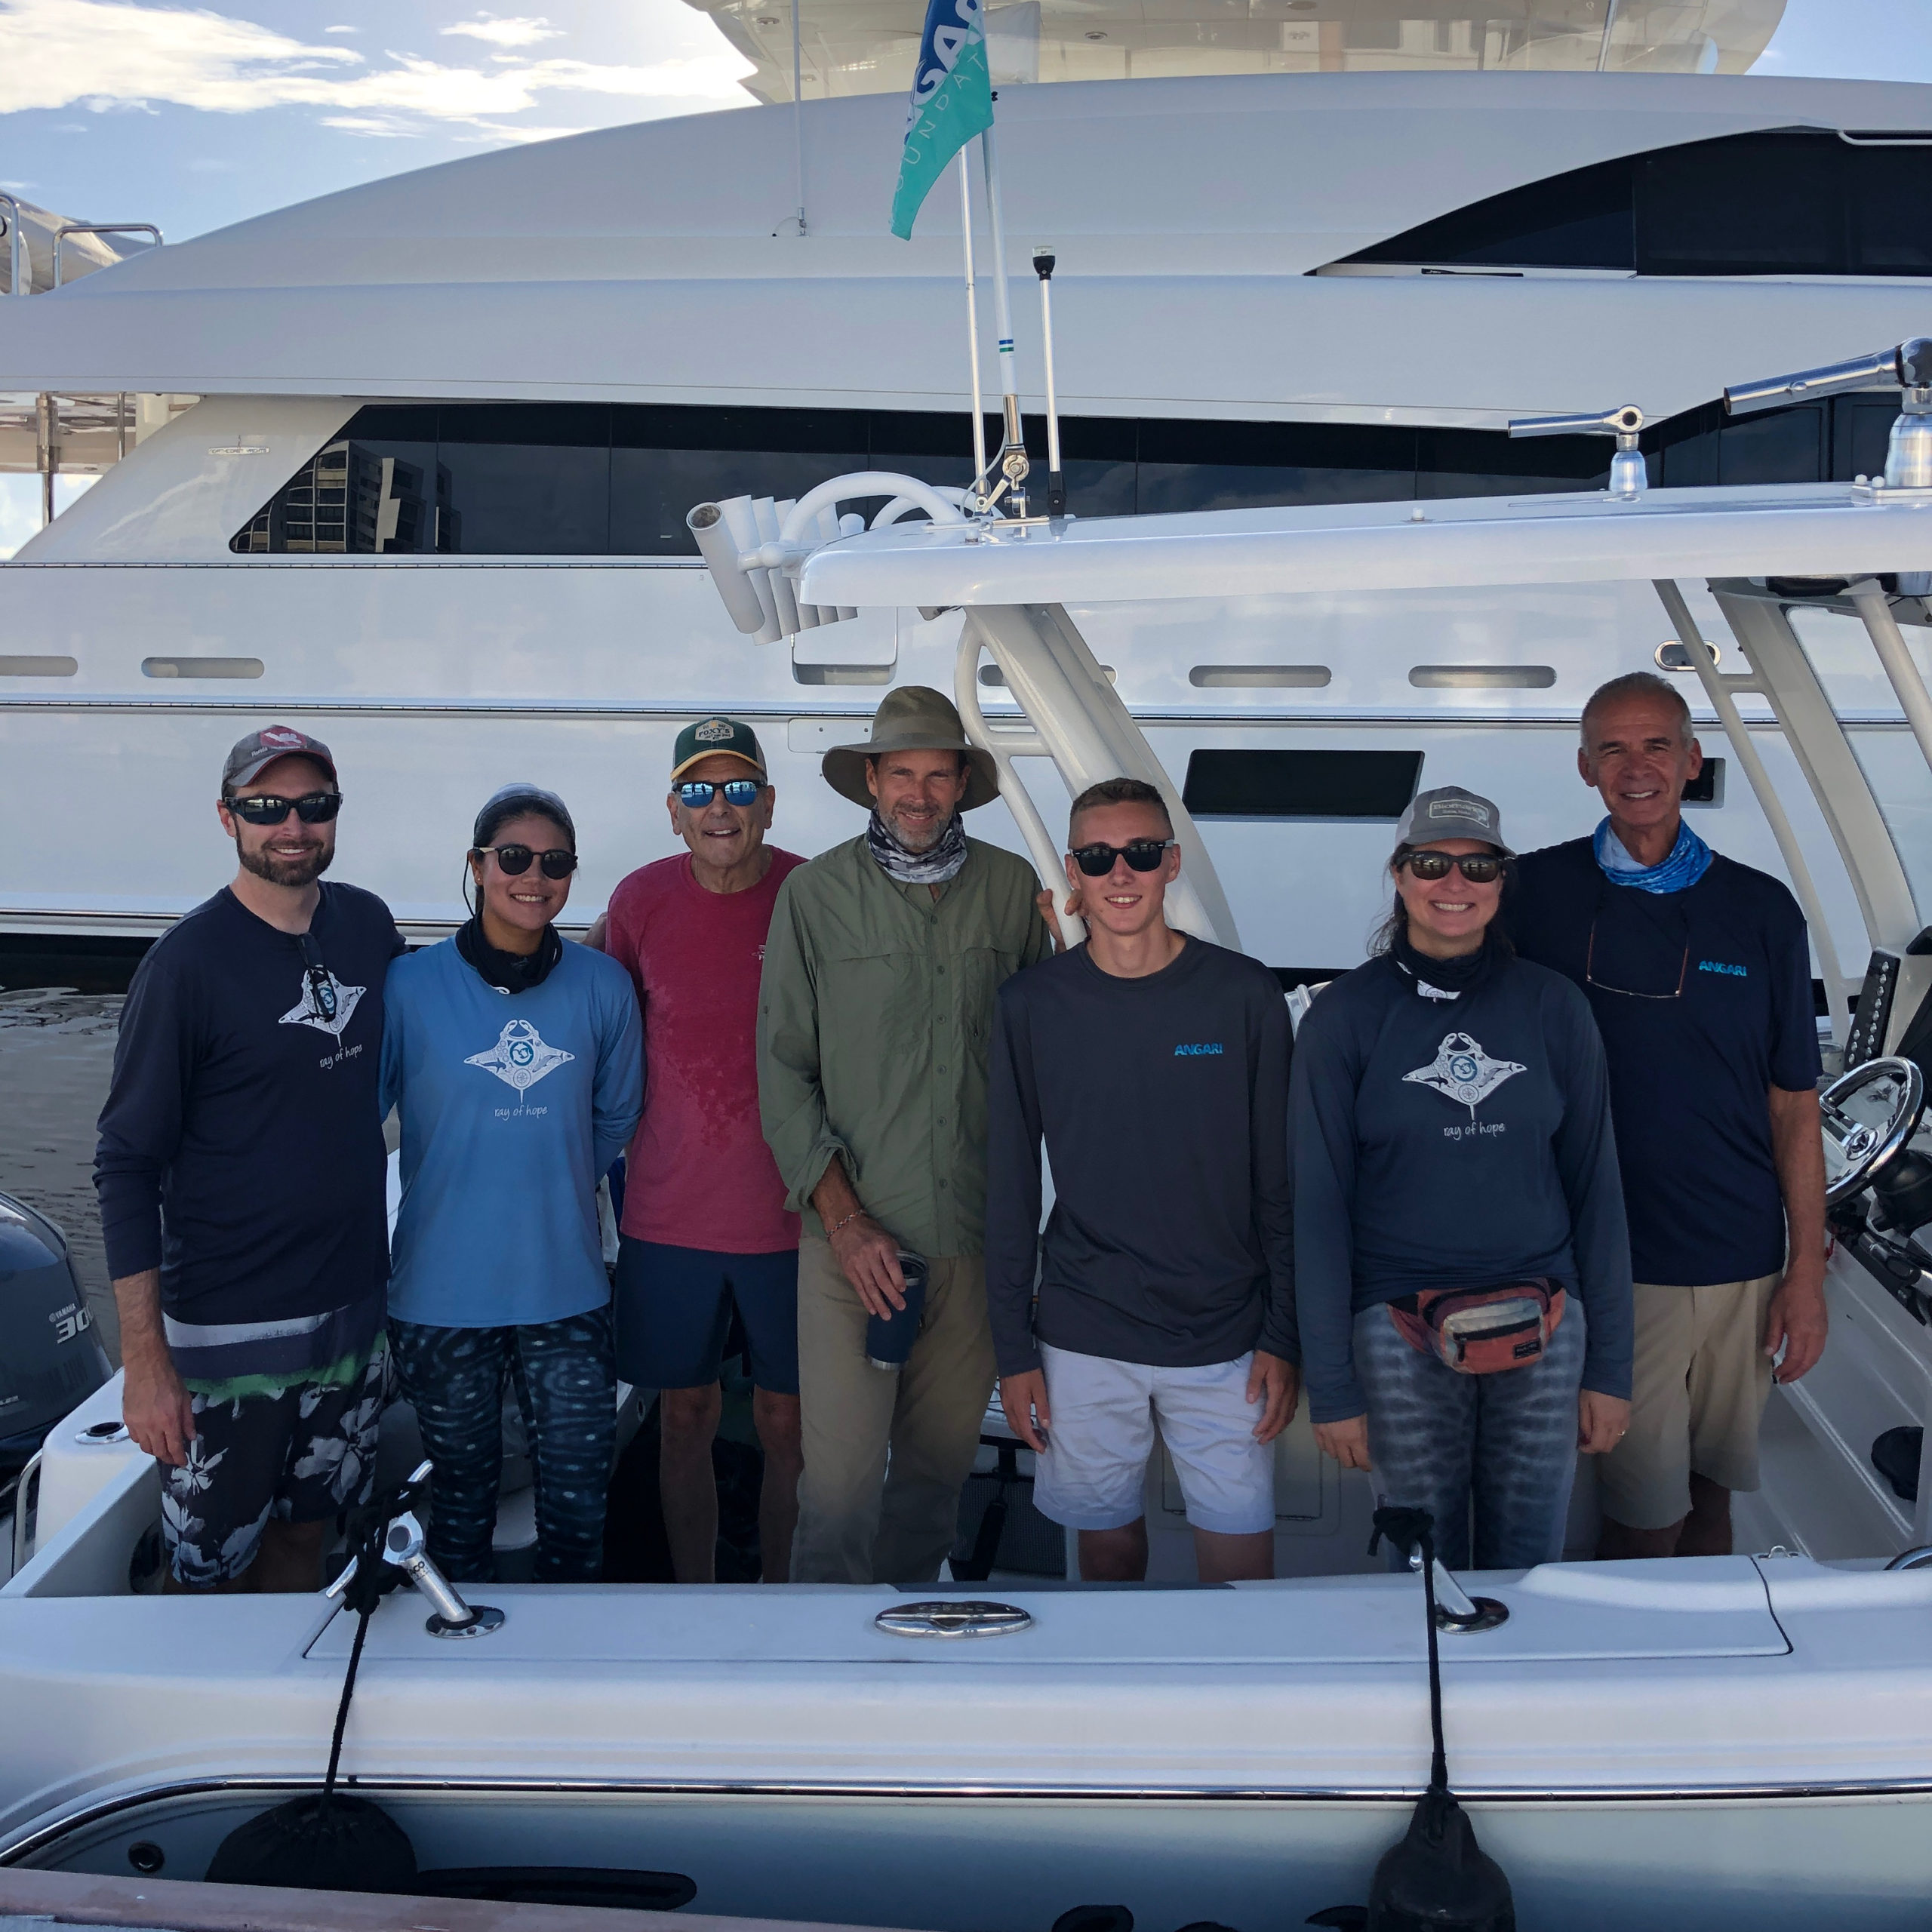 The Florida Manta Project, Digital Life and ANGARI Foundation team on Expedition 41 to study and film manta rays. PC: Angela Rosenberg